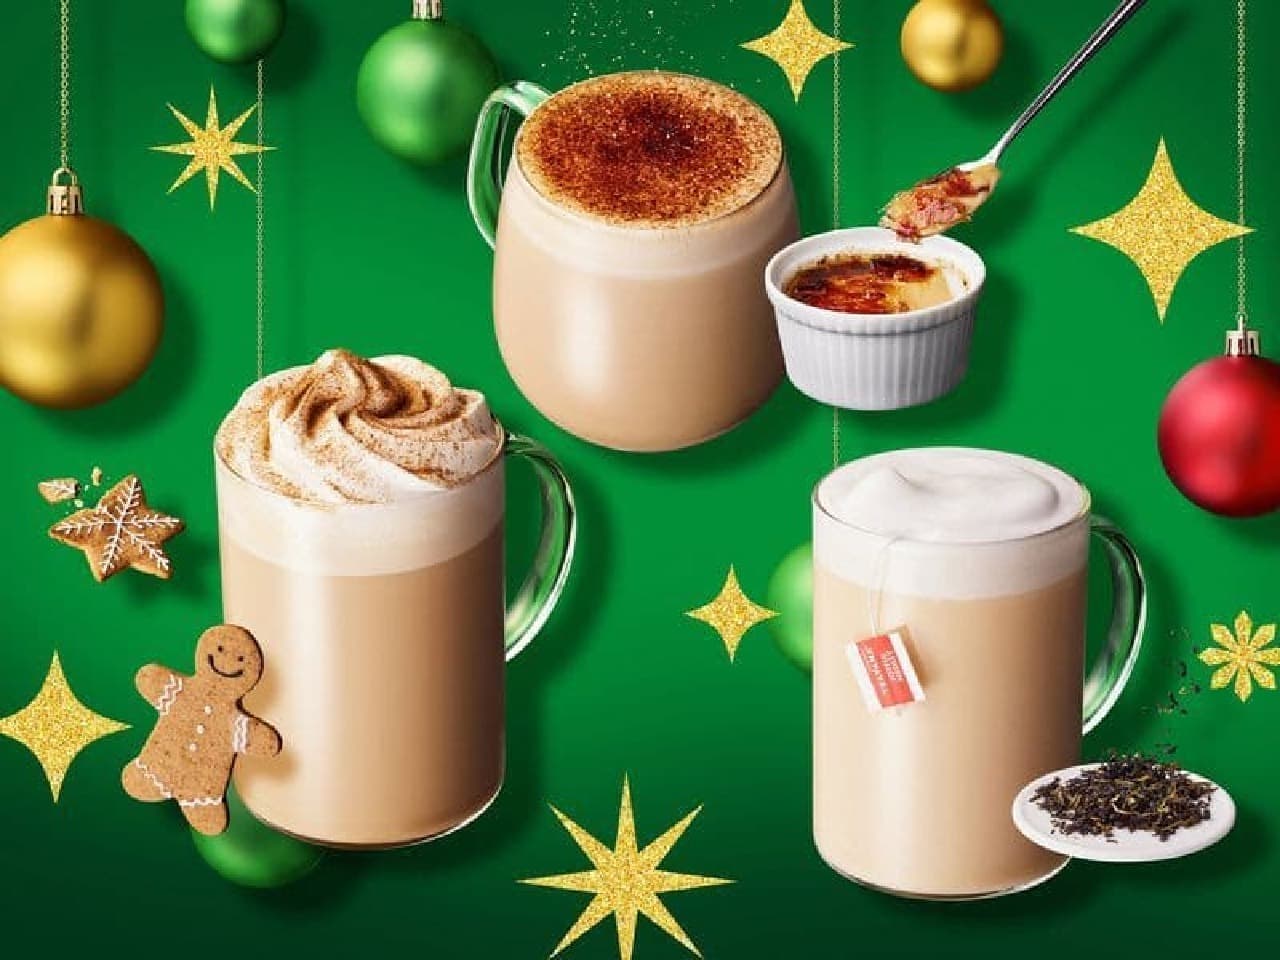 Starbucks "Gingerbread Latte," "Joyful Medley Tea Latte," and "Creme Brulee Latte